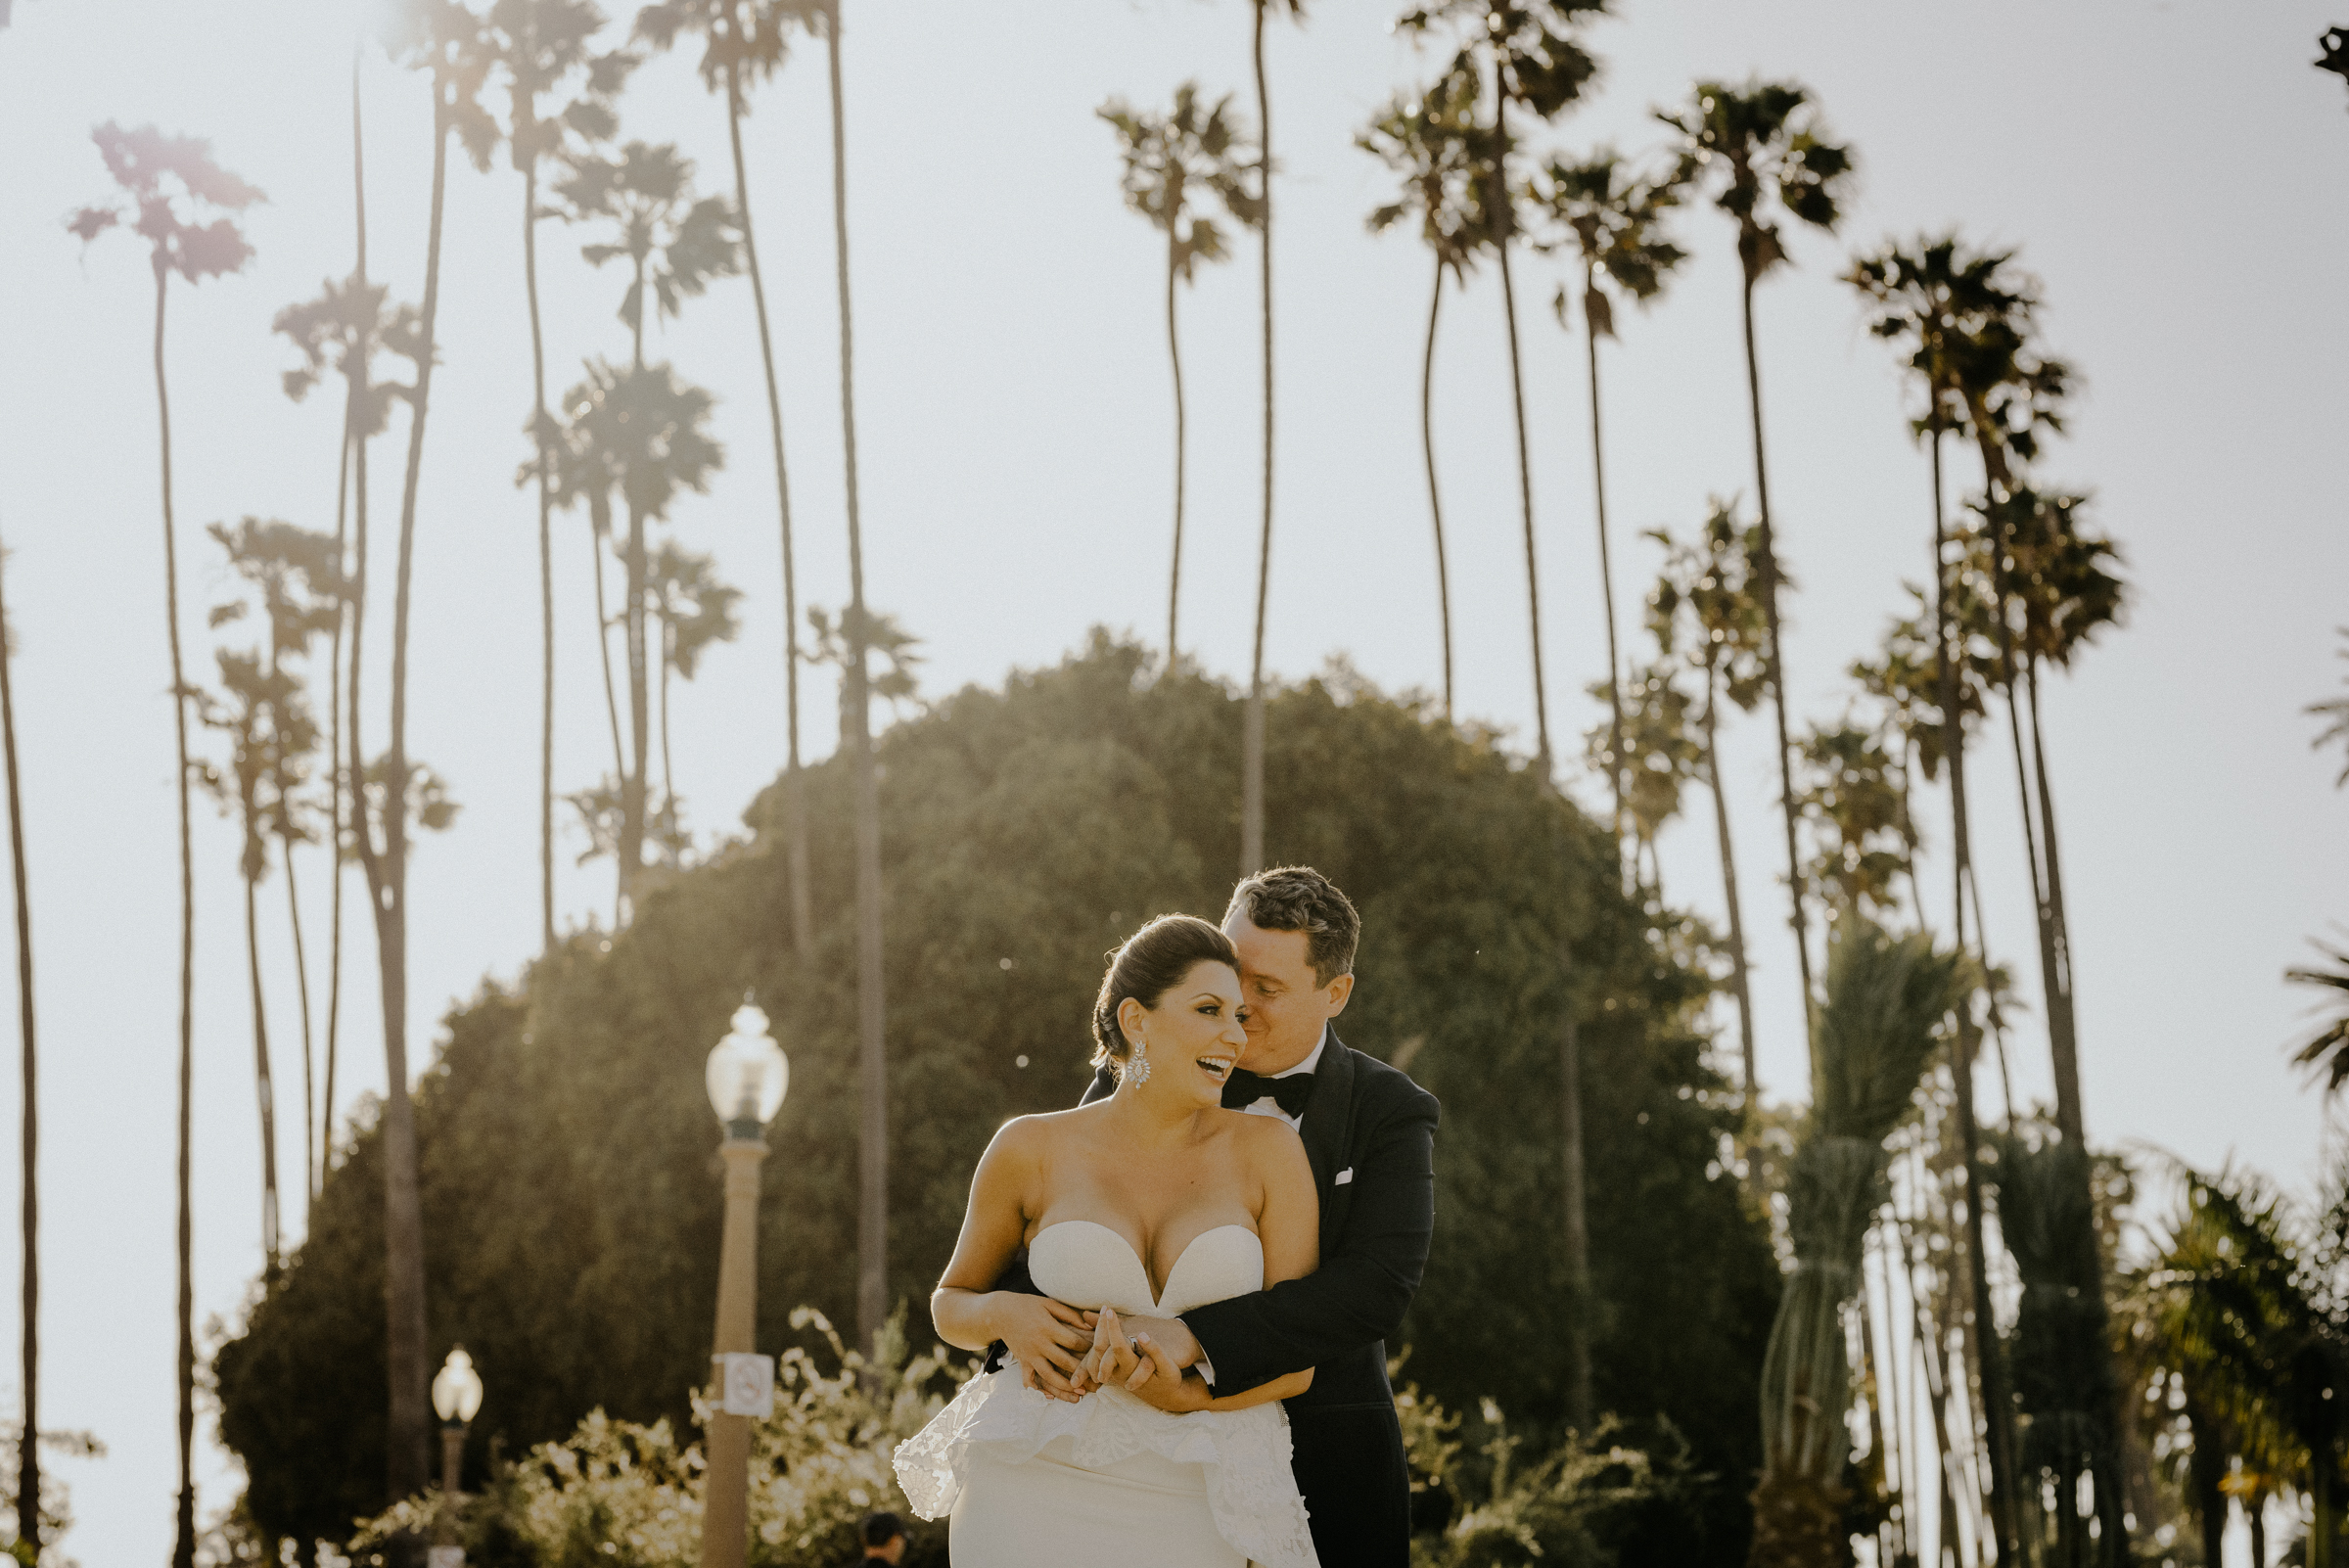 los angeles wedding photography - L.A. elopement - santa monica - IsaiahAndTaylor.com-2.jpg